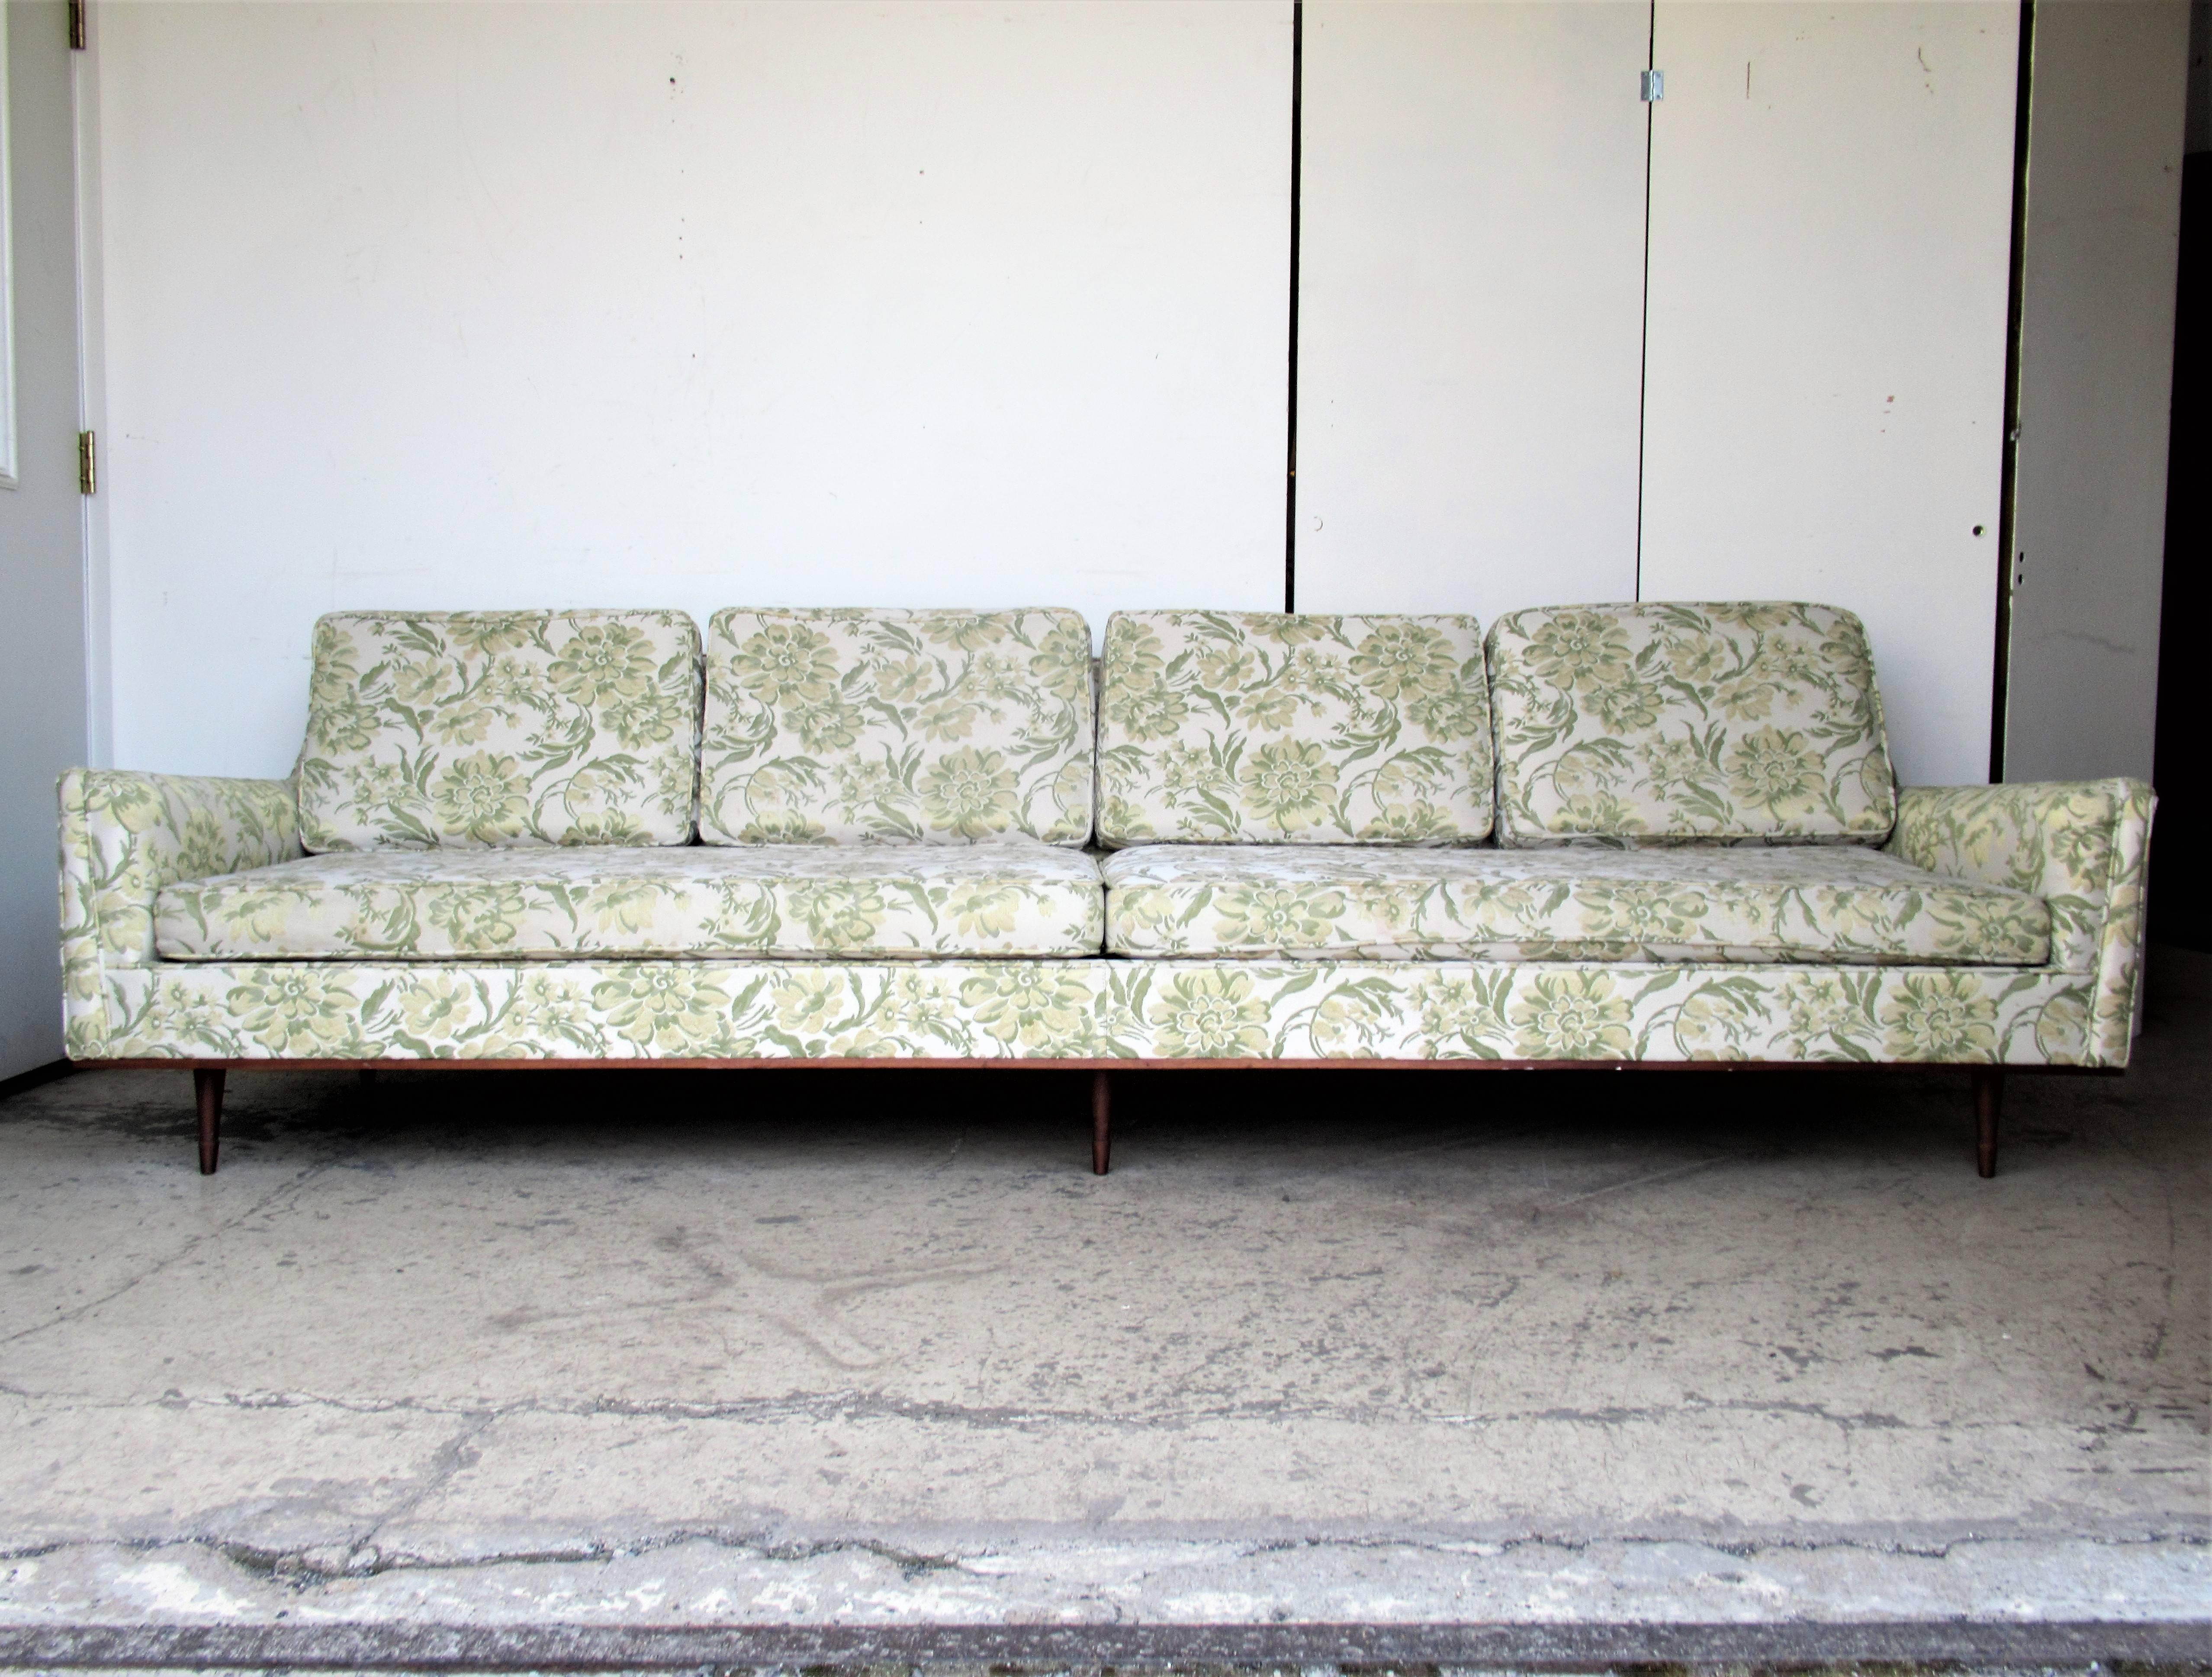  Sleek Elongated Form Sofa in the style of Gio Ponti 1